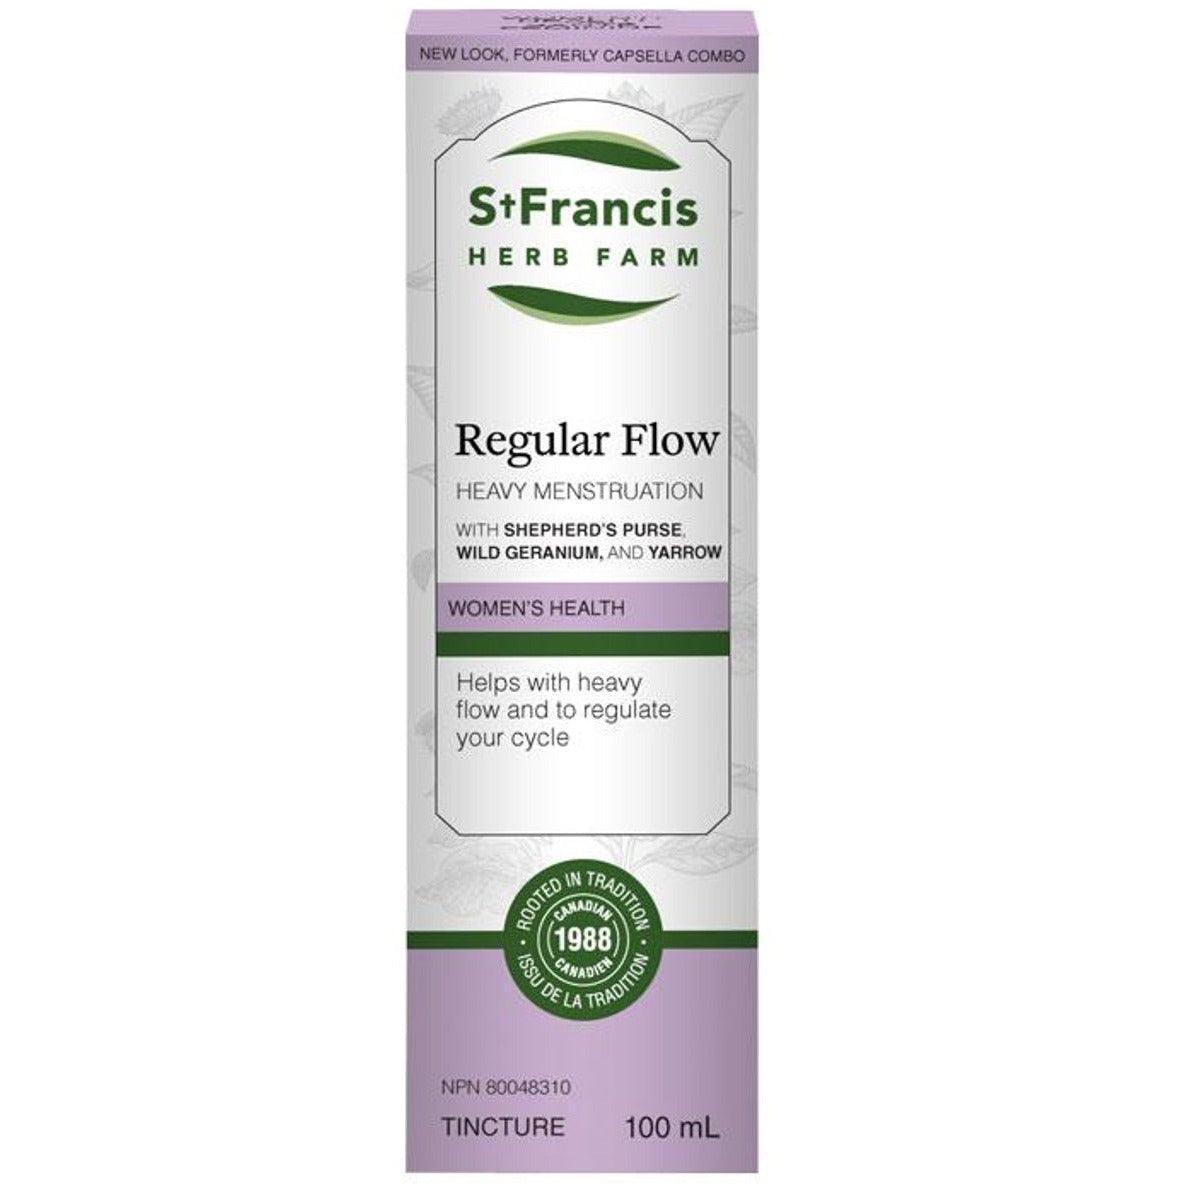 St. Francis Regular Flow 100ml Supplements - Hormonal Balance at Village Vitamin Store